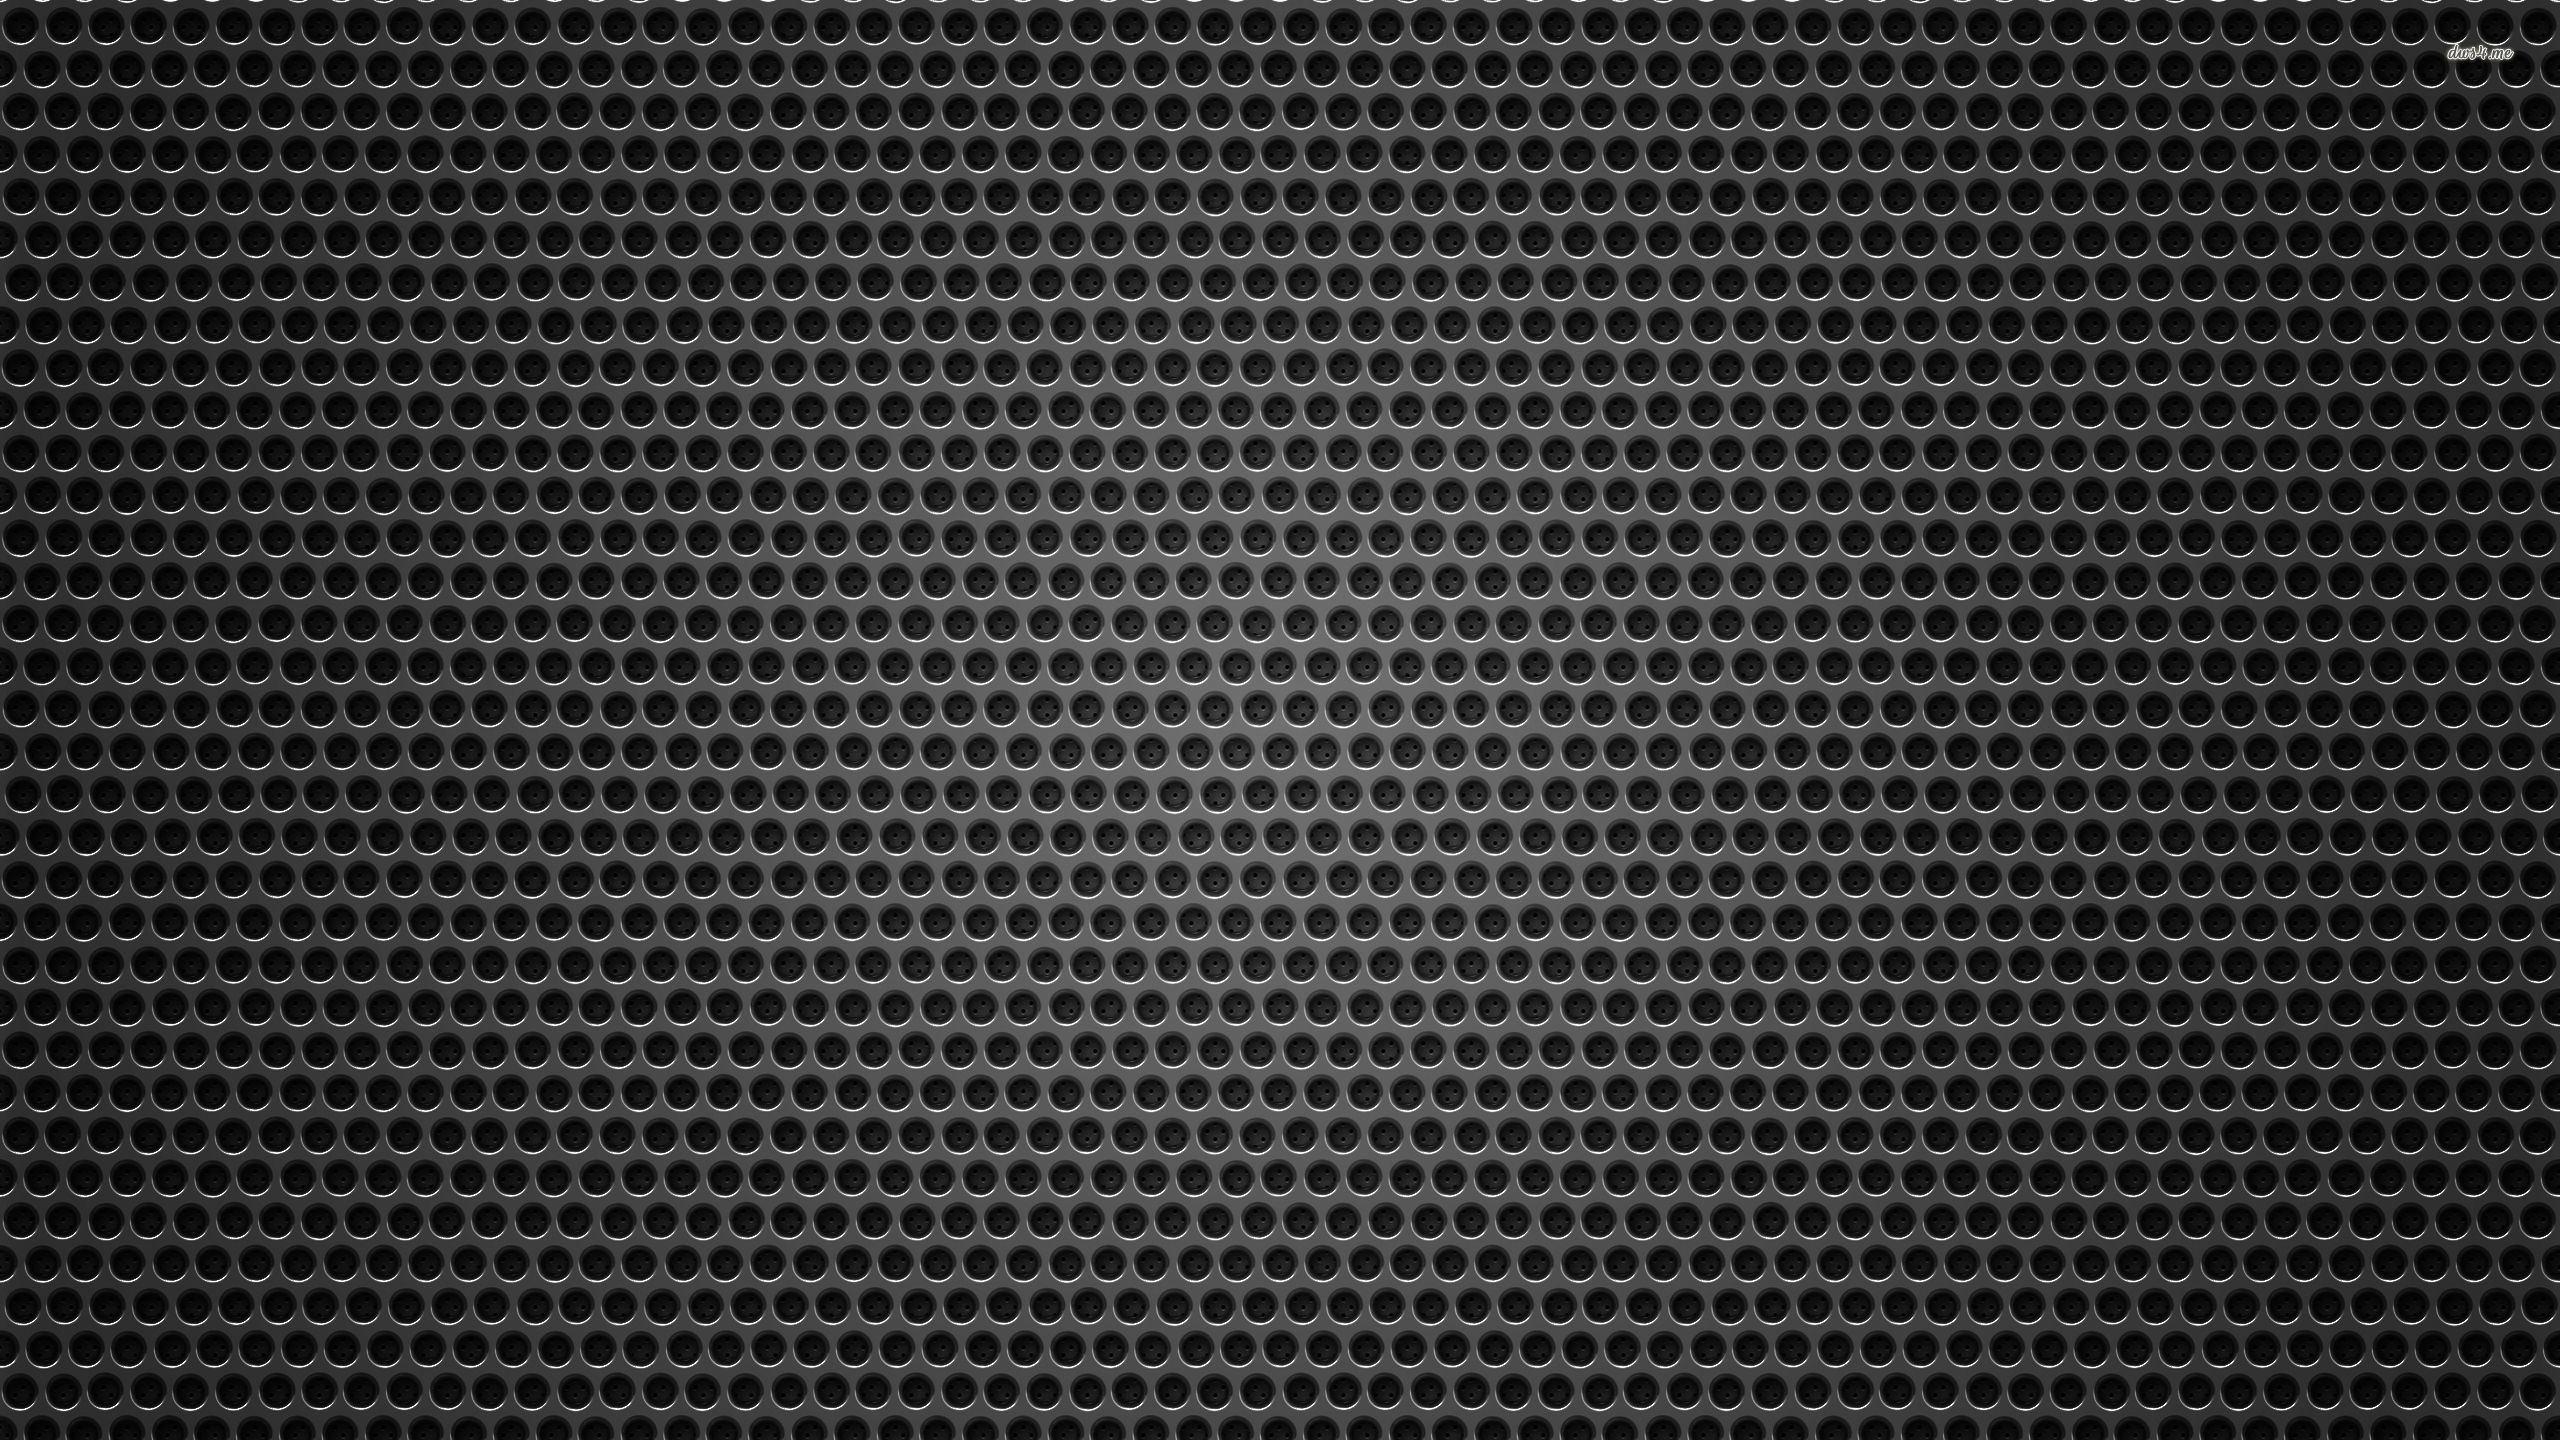 Black Dot Wallpapers